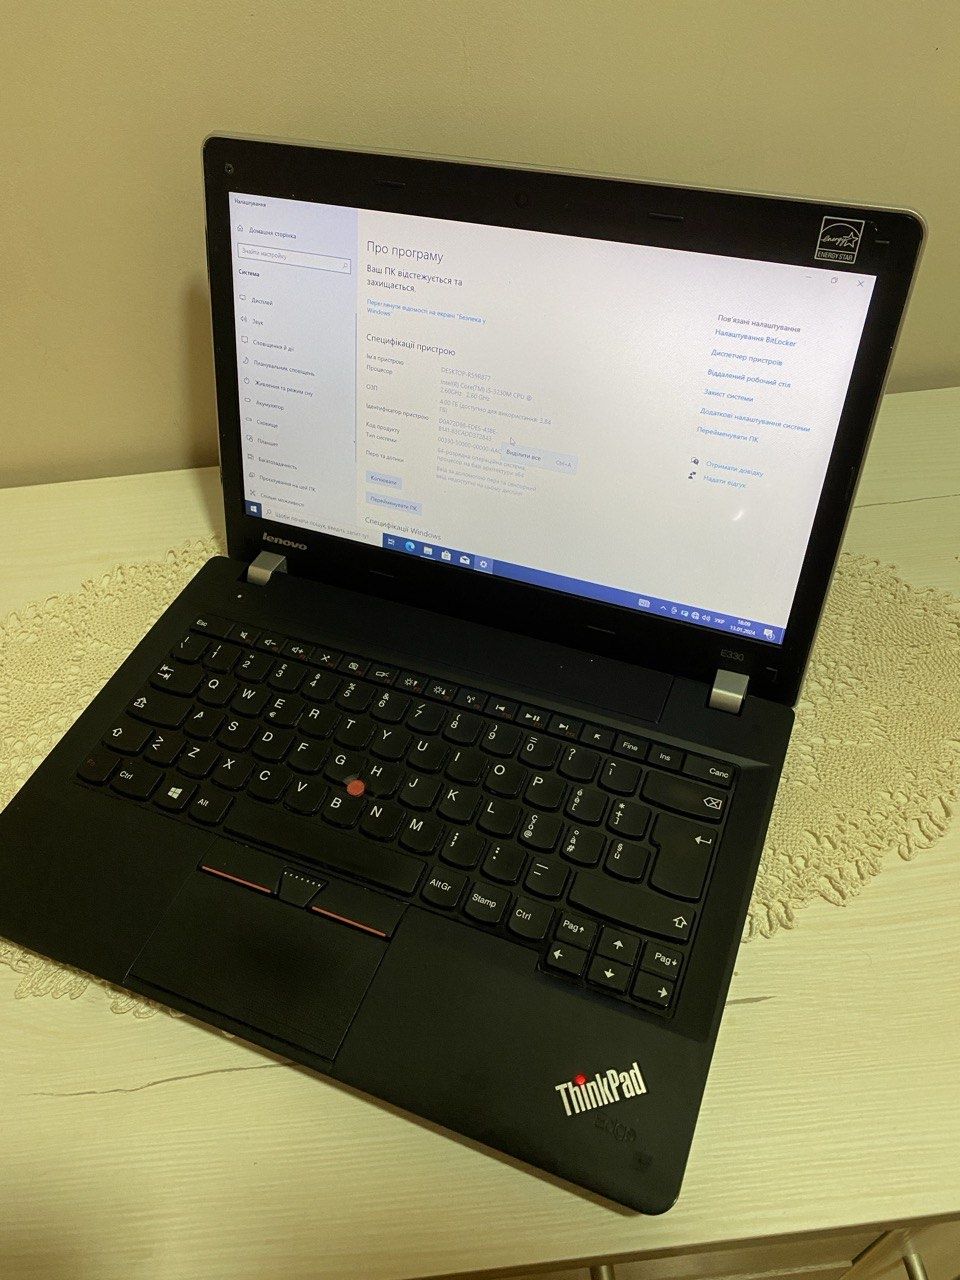 Lenovo ThinkPad E330 edge на процесорі Intel I5!!!

Досить шустрий ноу